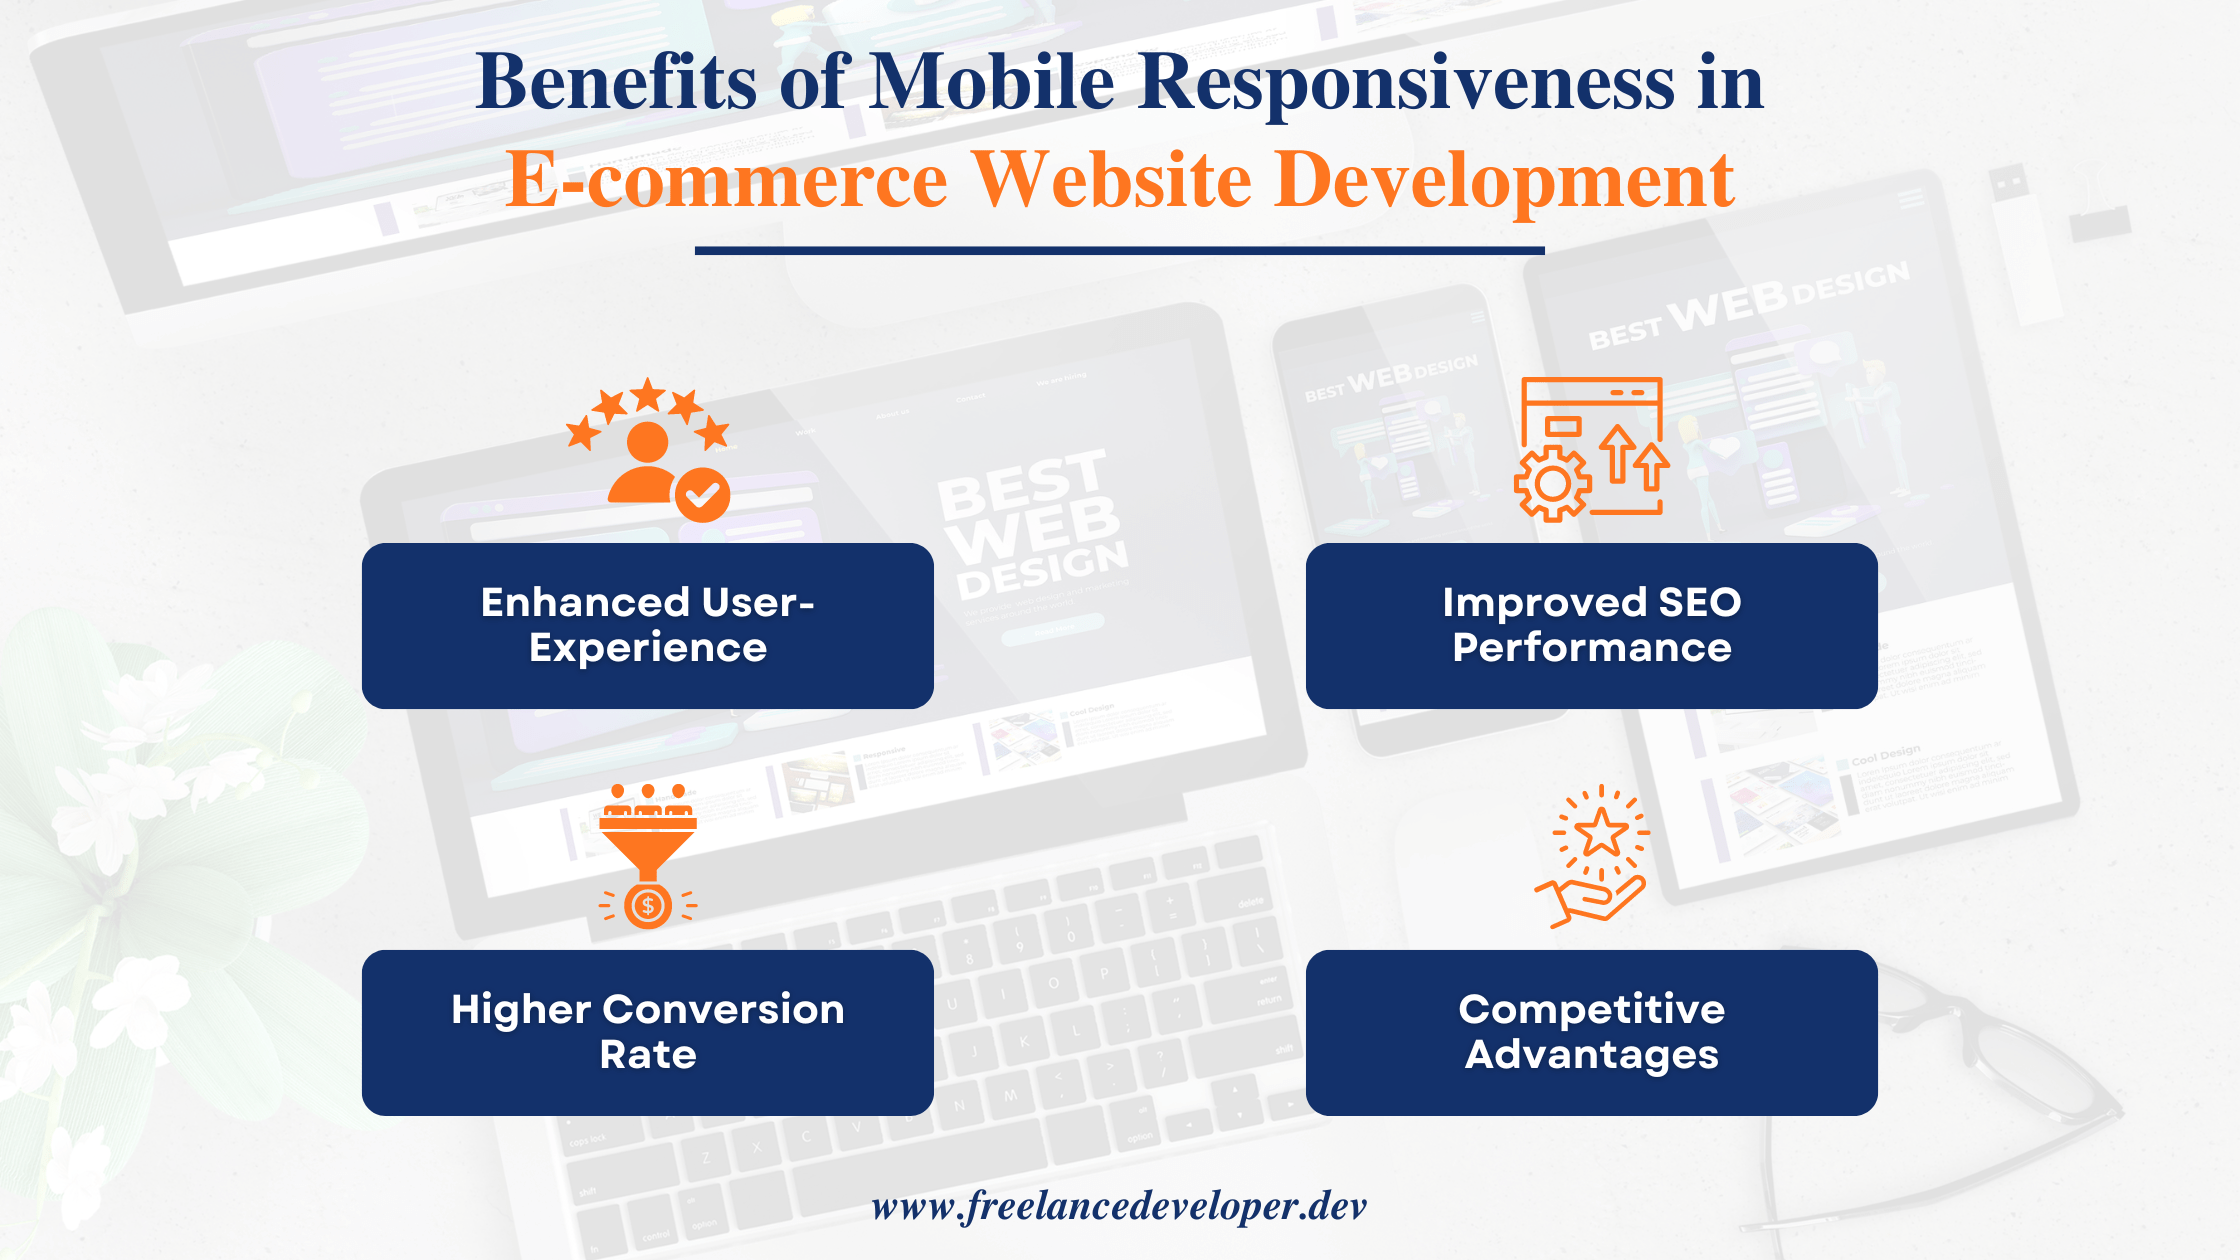 Benefits of Mobile Responsiveness in E-commerce Website Development